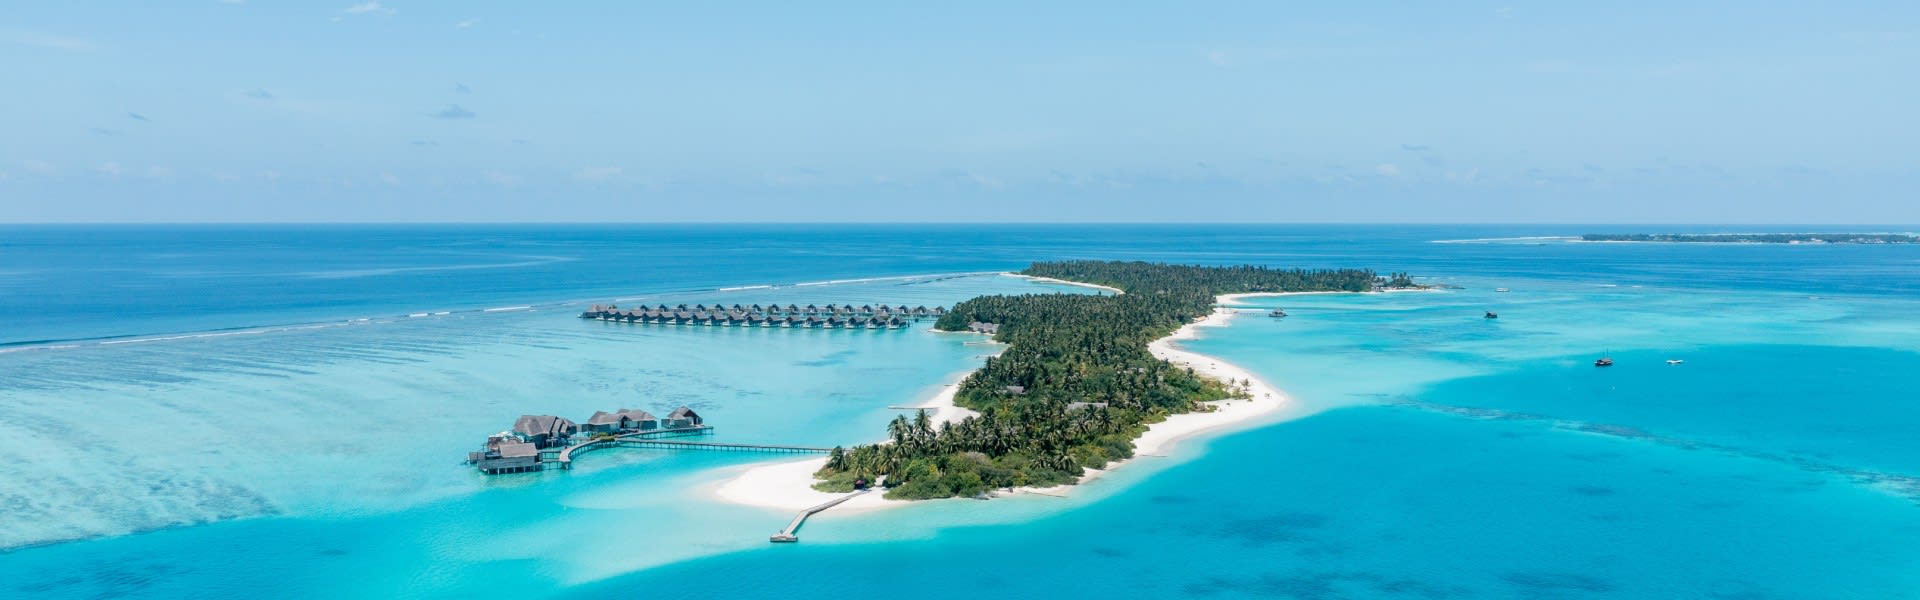 Niyama Private Islands Maldives - Aerial View 